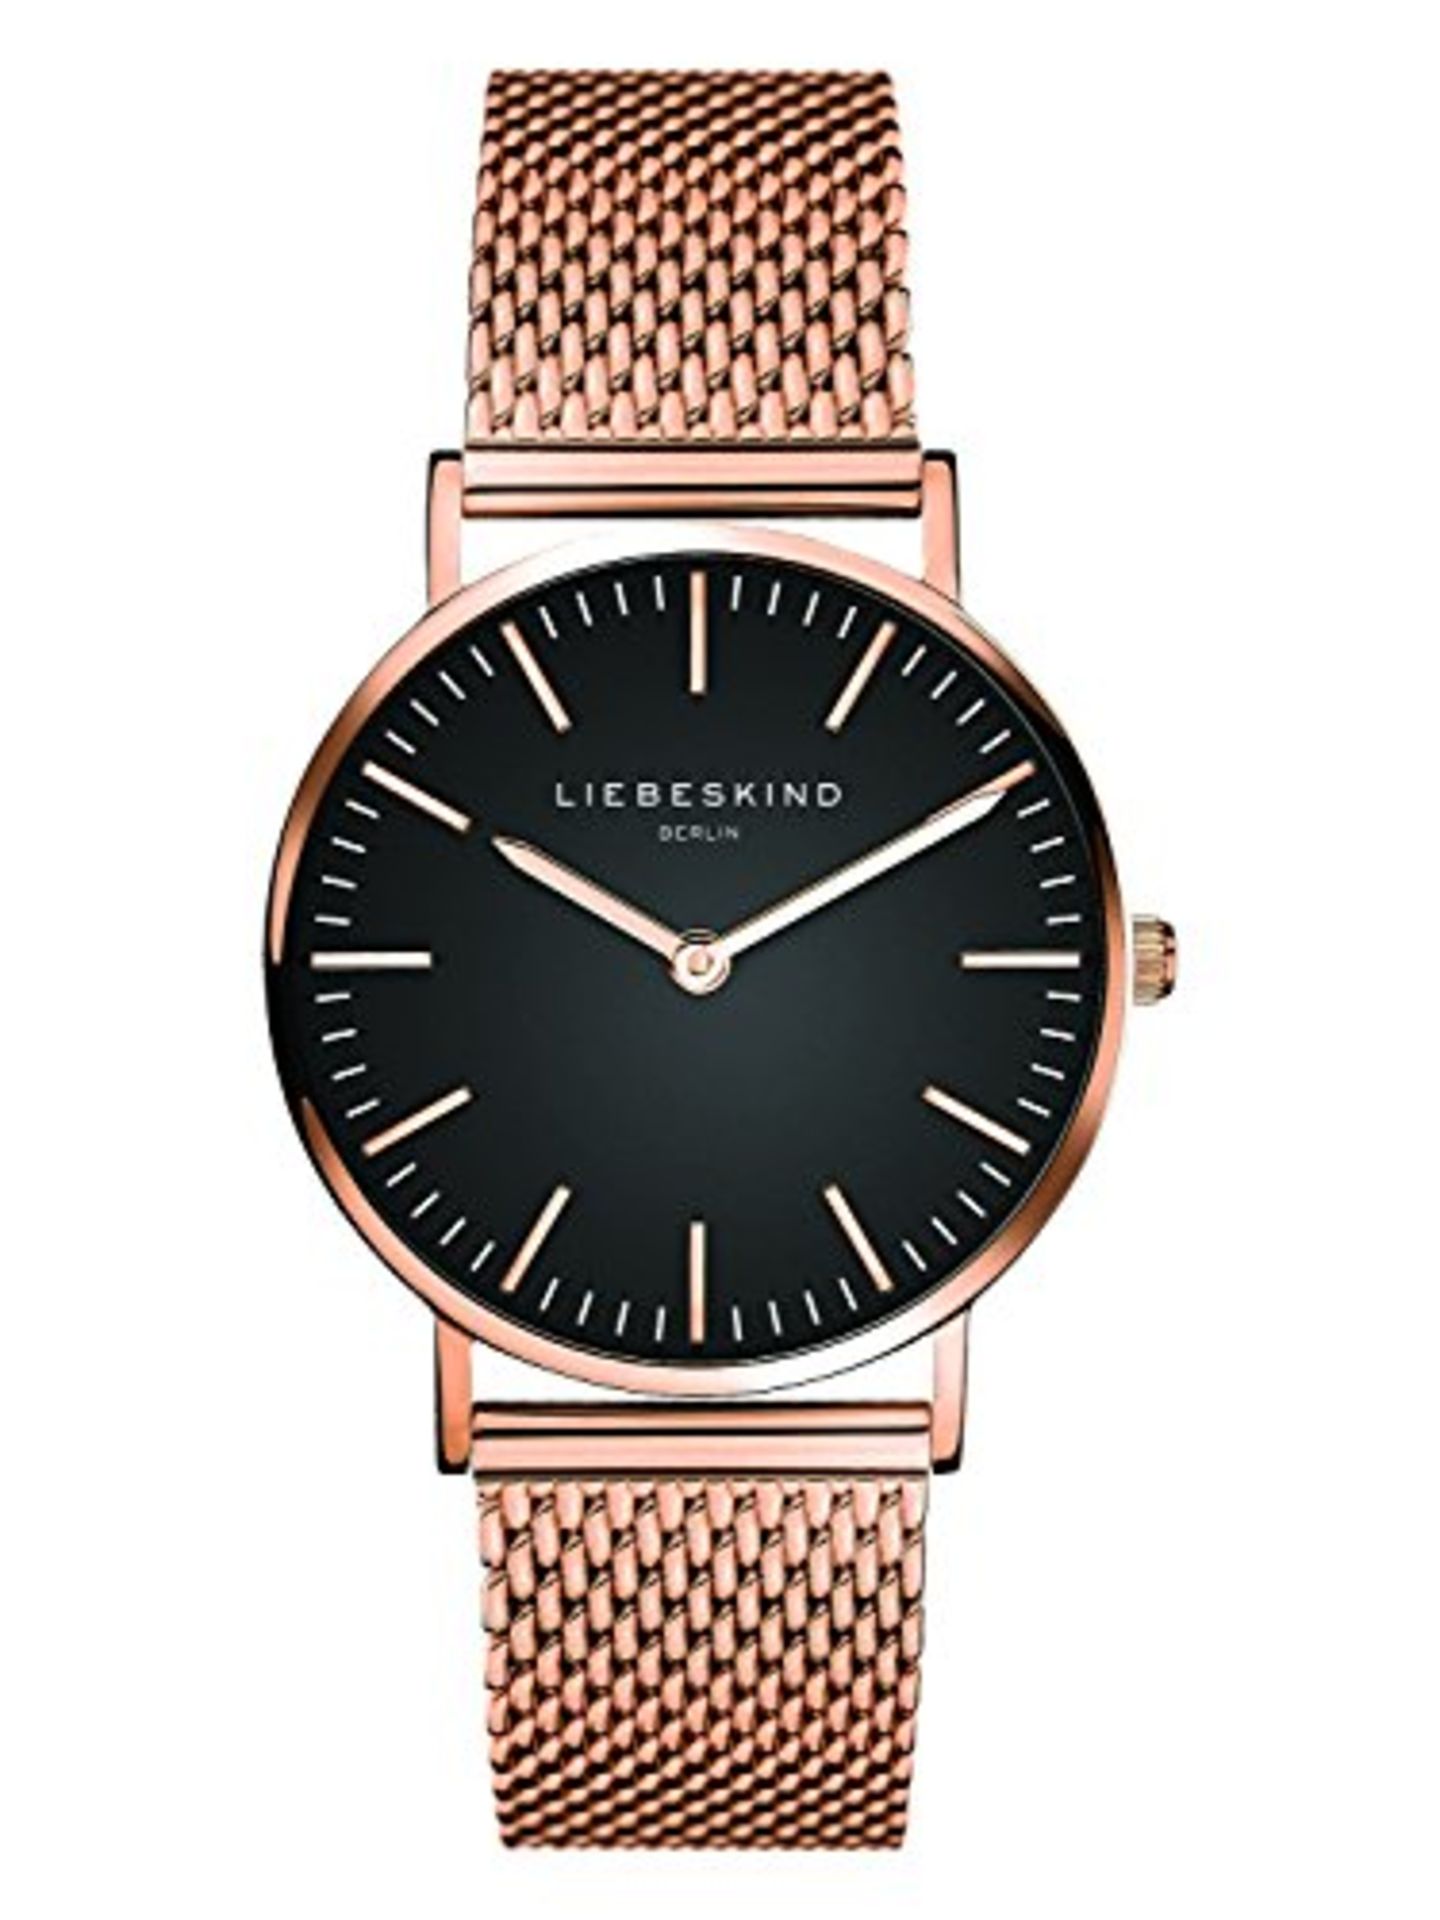 RRP £67.00 Liebeskind Berlin women's analogue quartz wristwatch with stainless steel bracelet LT-